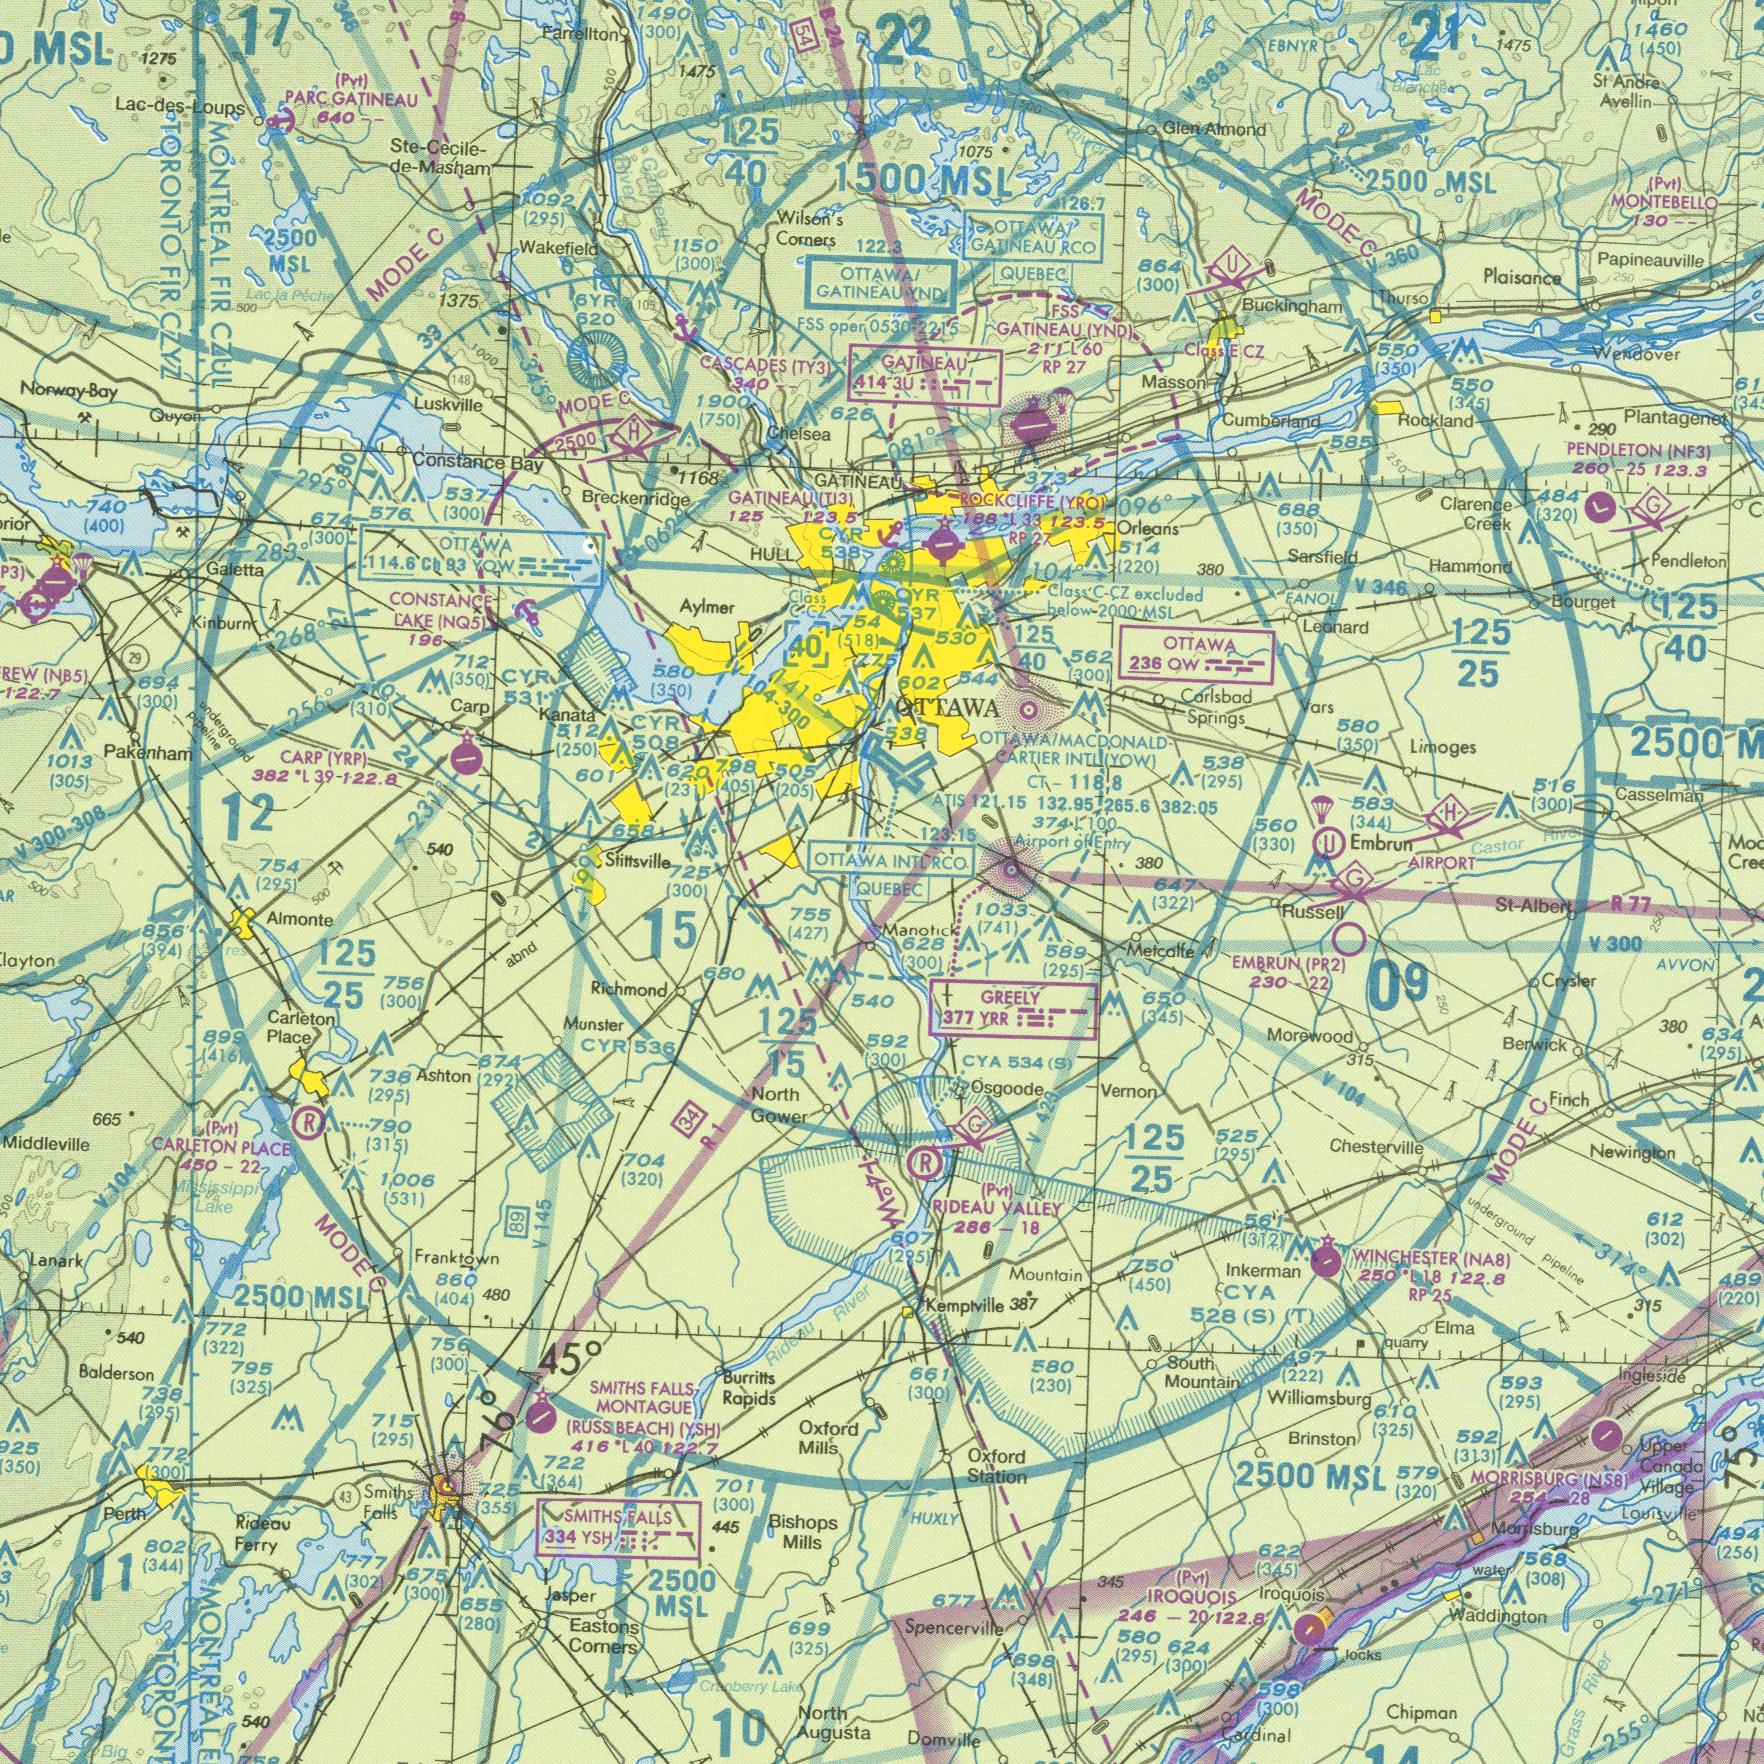 Aviation Navigation Charts